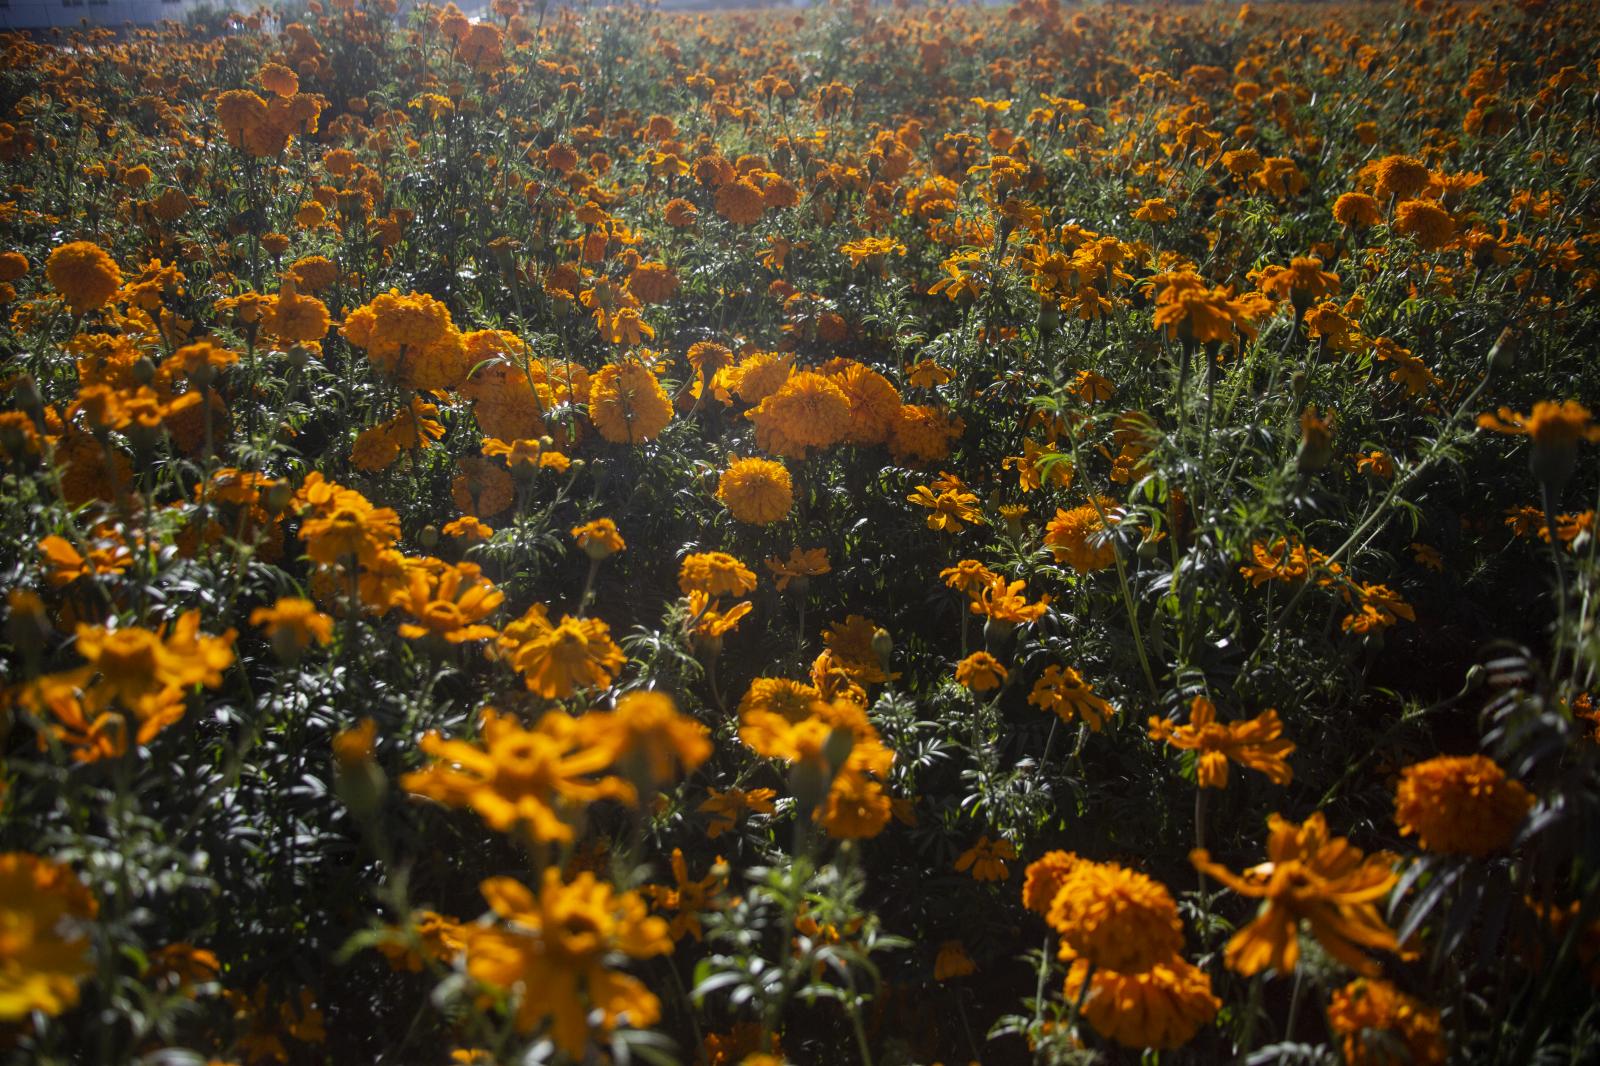 Image from  Bloomberg News - Cempazuchitl Flower